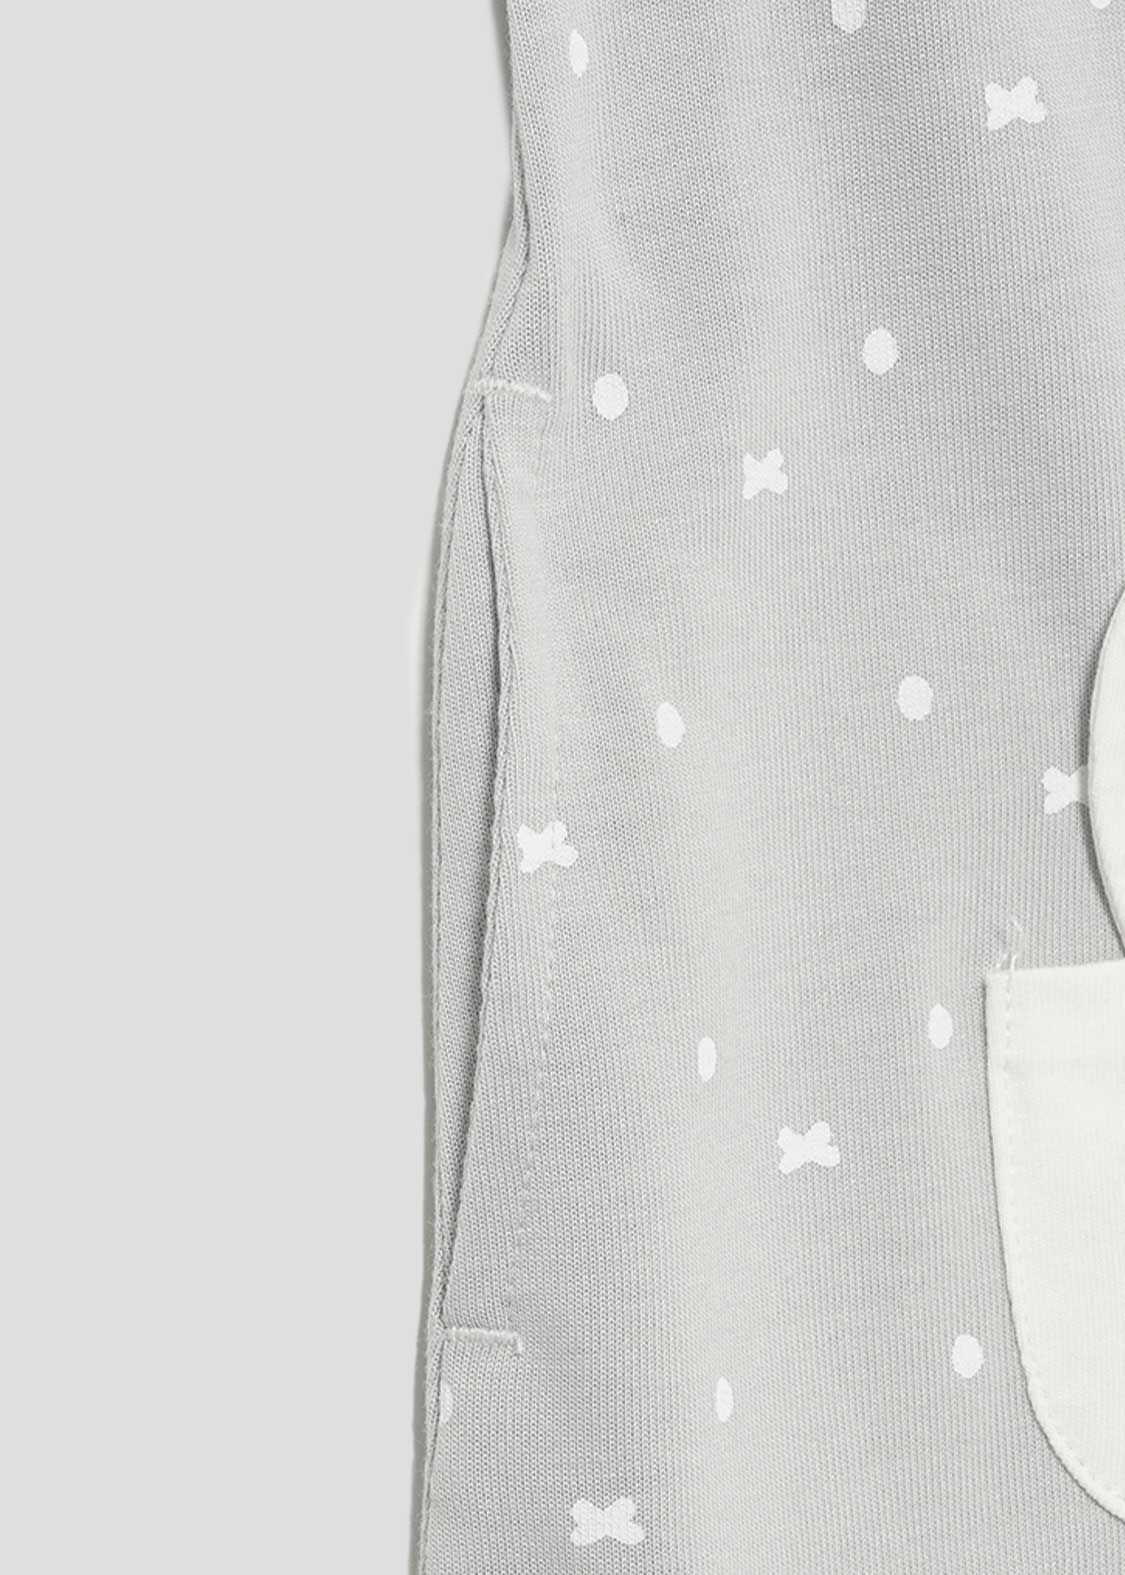 miffy Jumper Skirt (miffy_miffy Zoom Pattern)